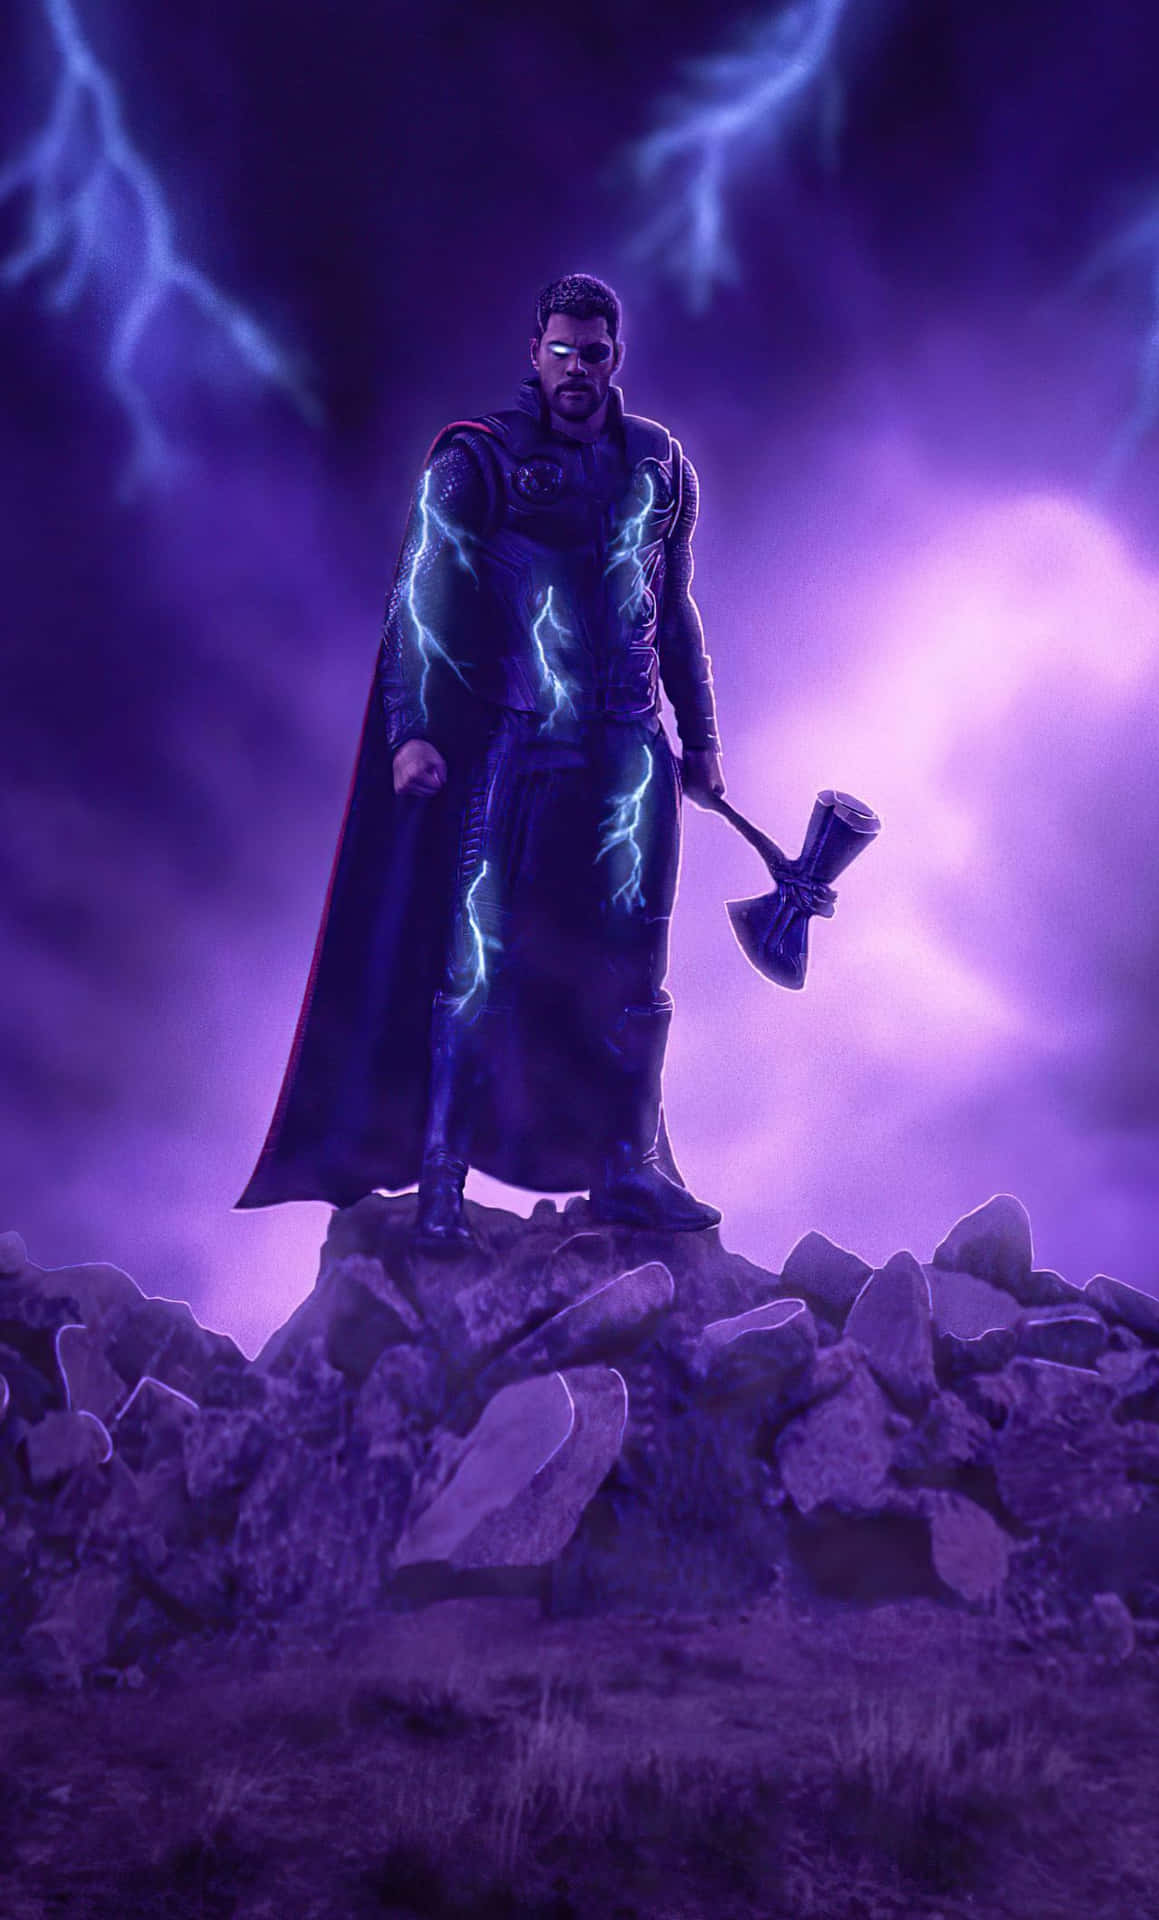 Thor, God of Thunder and Lightning